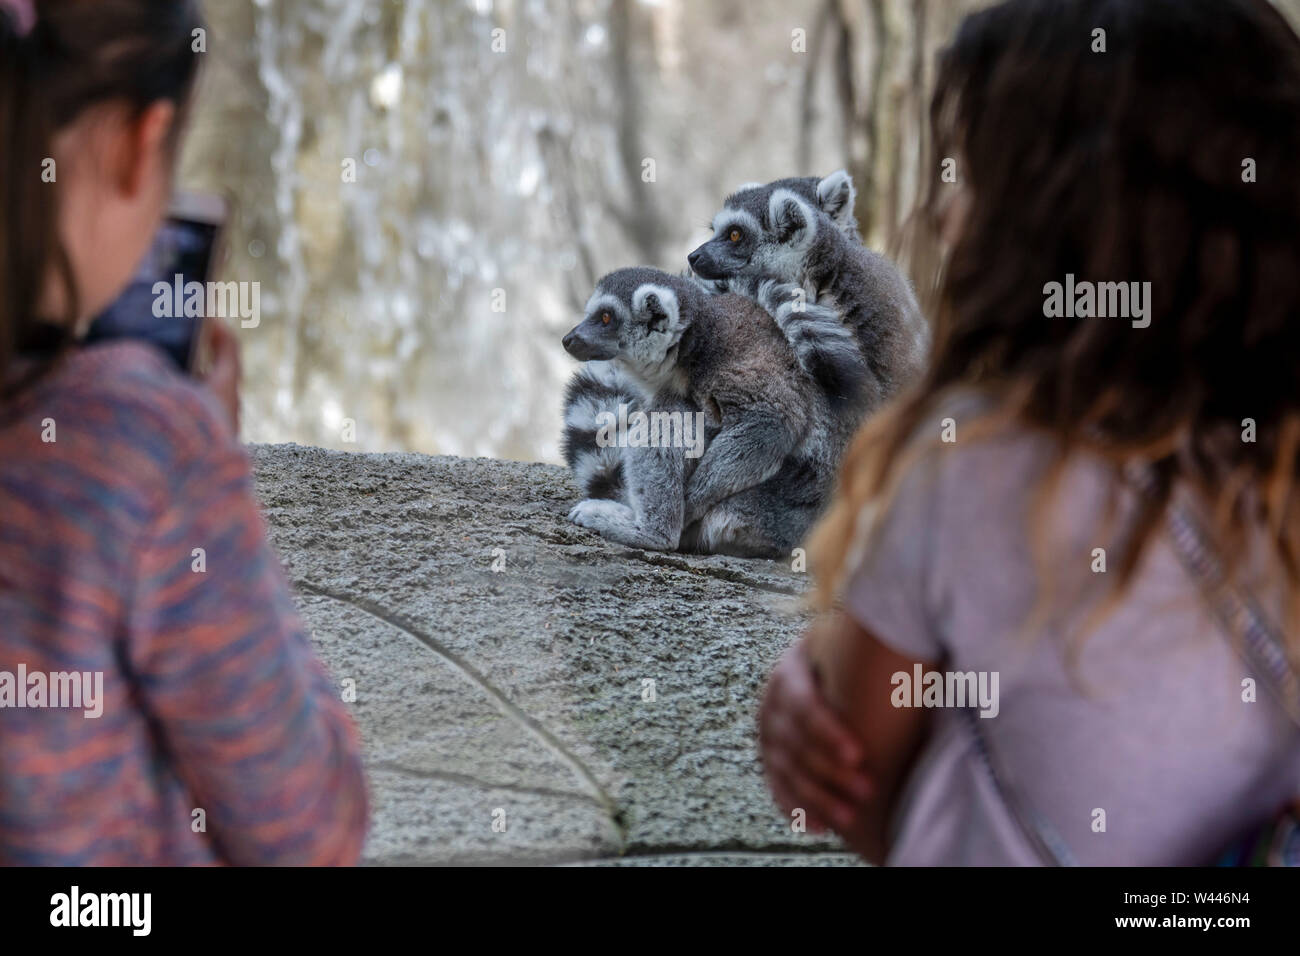 Detroit, Michigan - Children watch ringtailed lemurs (Lemur catta) at the Detroit Zoo. Stock Photo